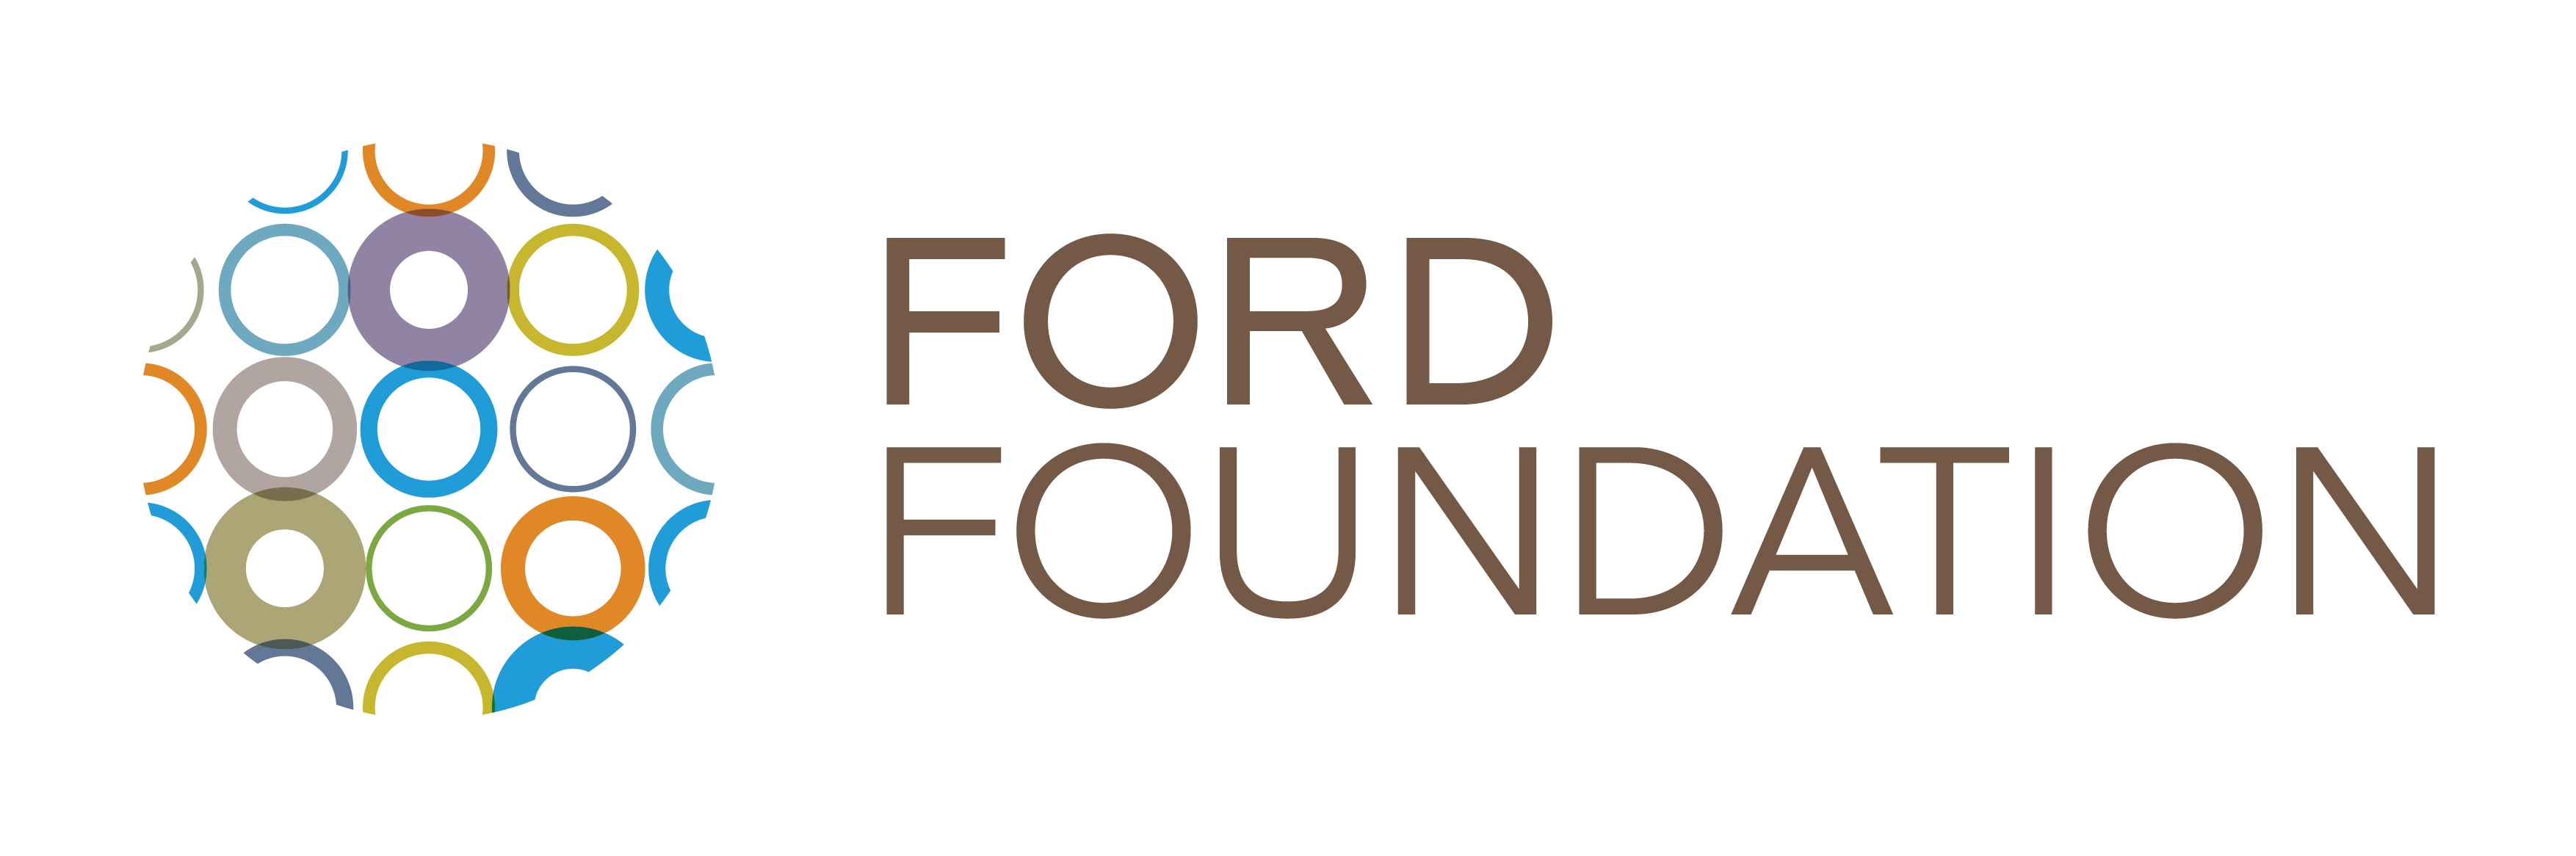 Ford Foundation-01